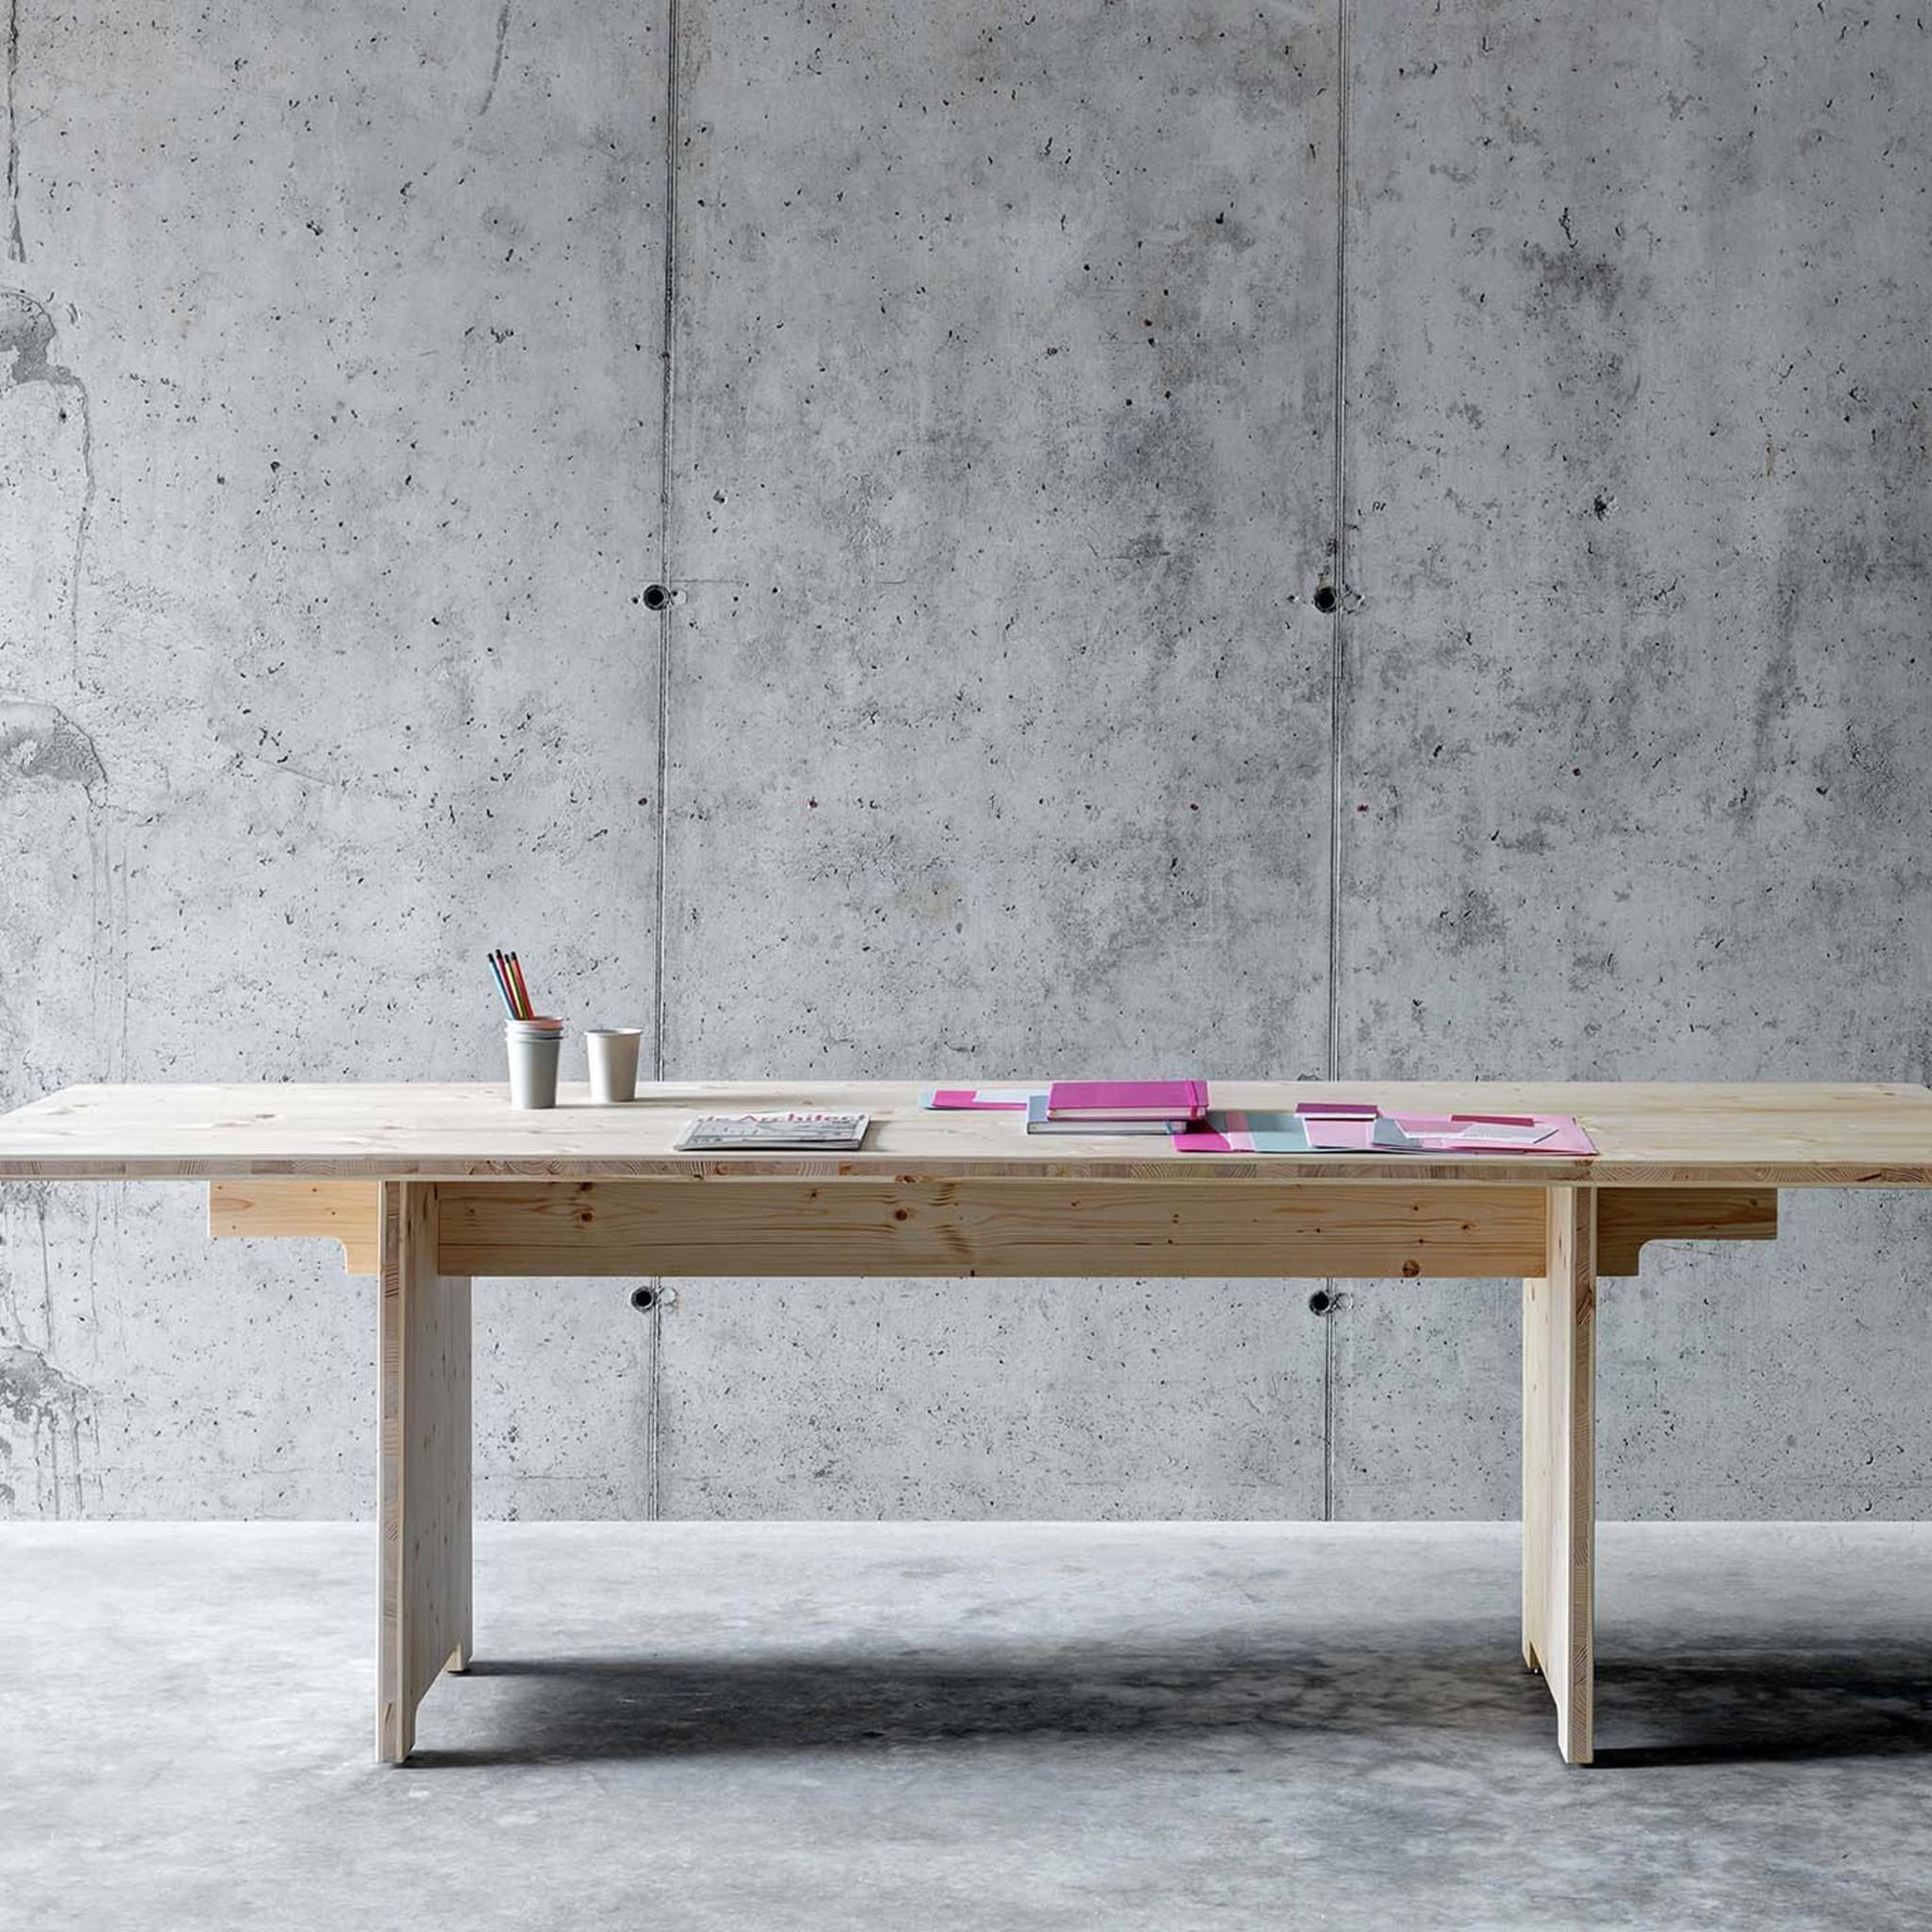 Tino Table by Pasquini Tranfa Architects - Alternative view 4